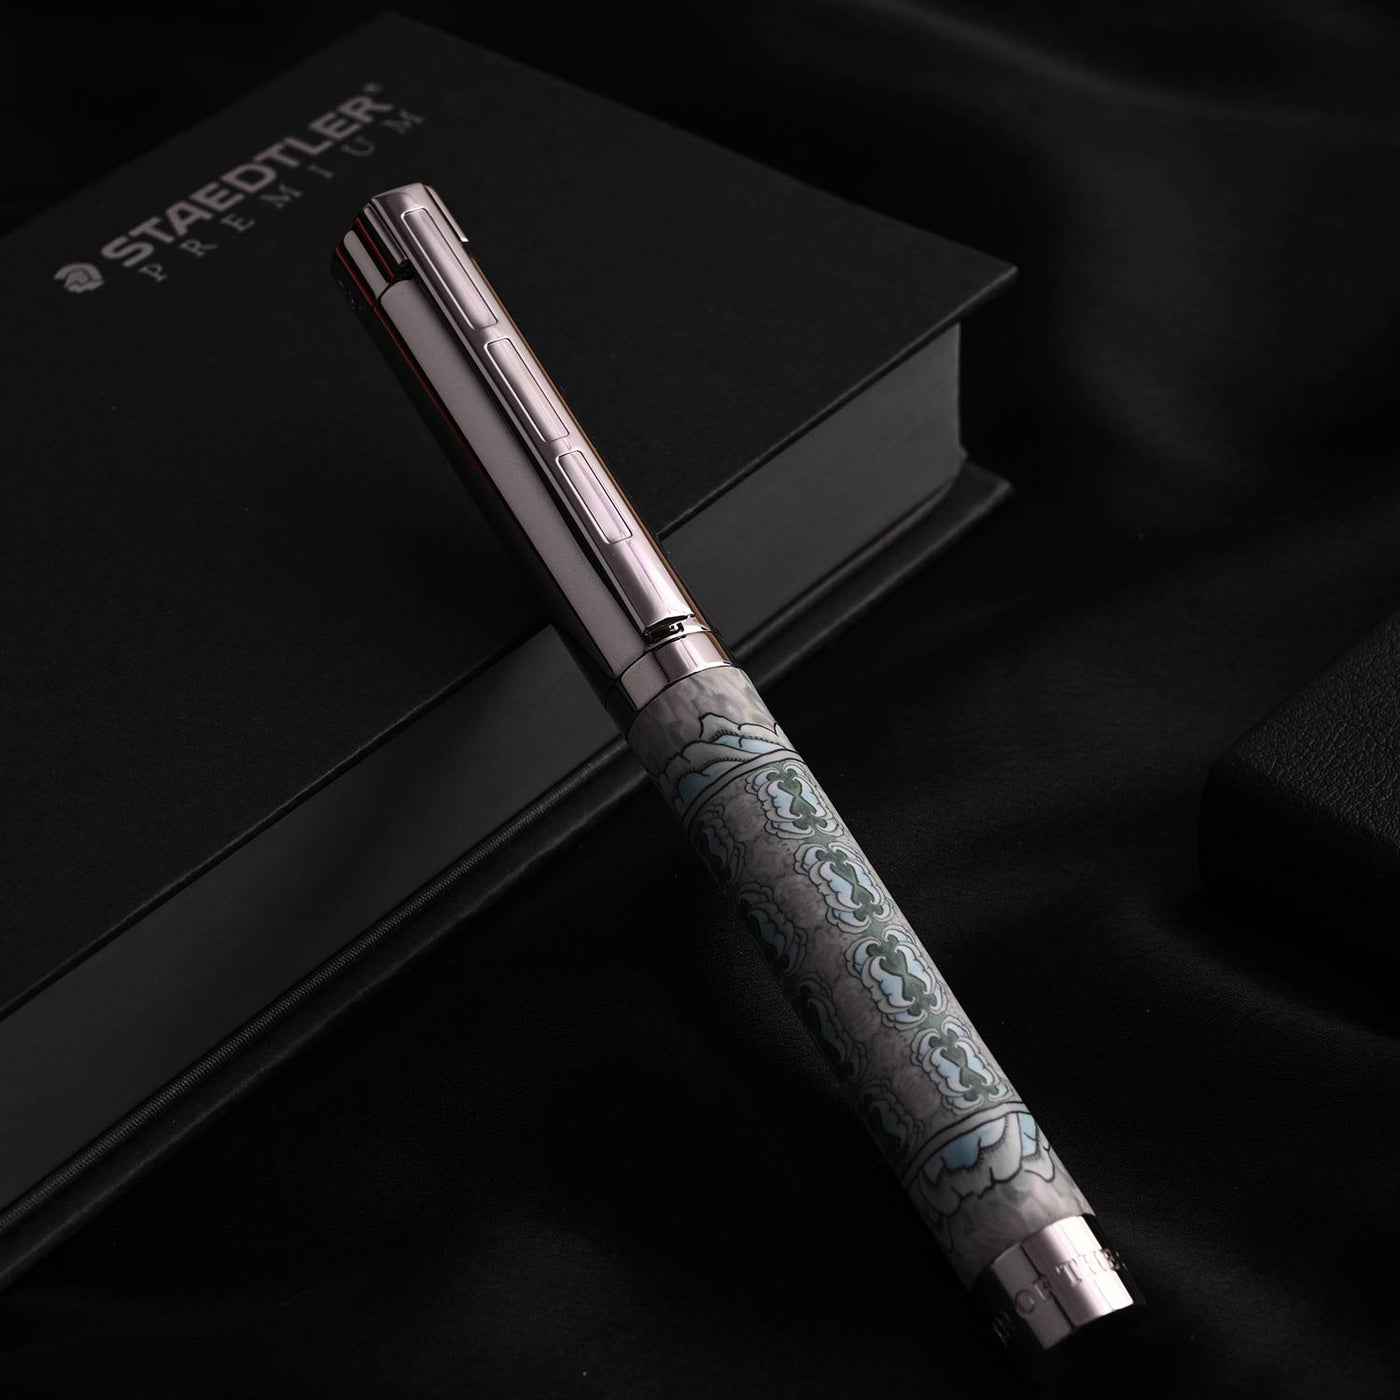 Staedtler Premium Pen of the Season Fountain Pen - Winter 2016 (Limited Edition)